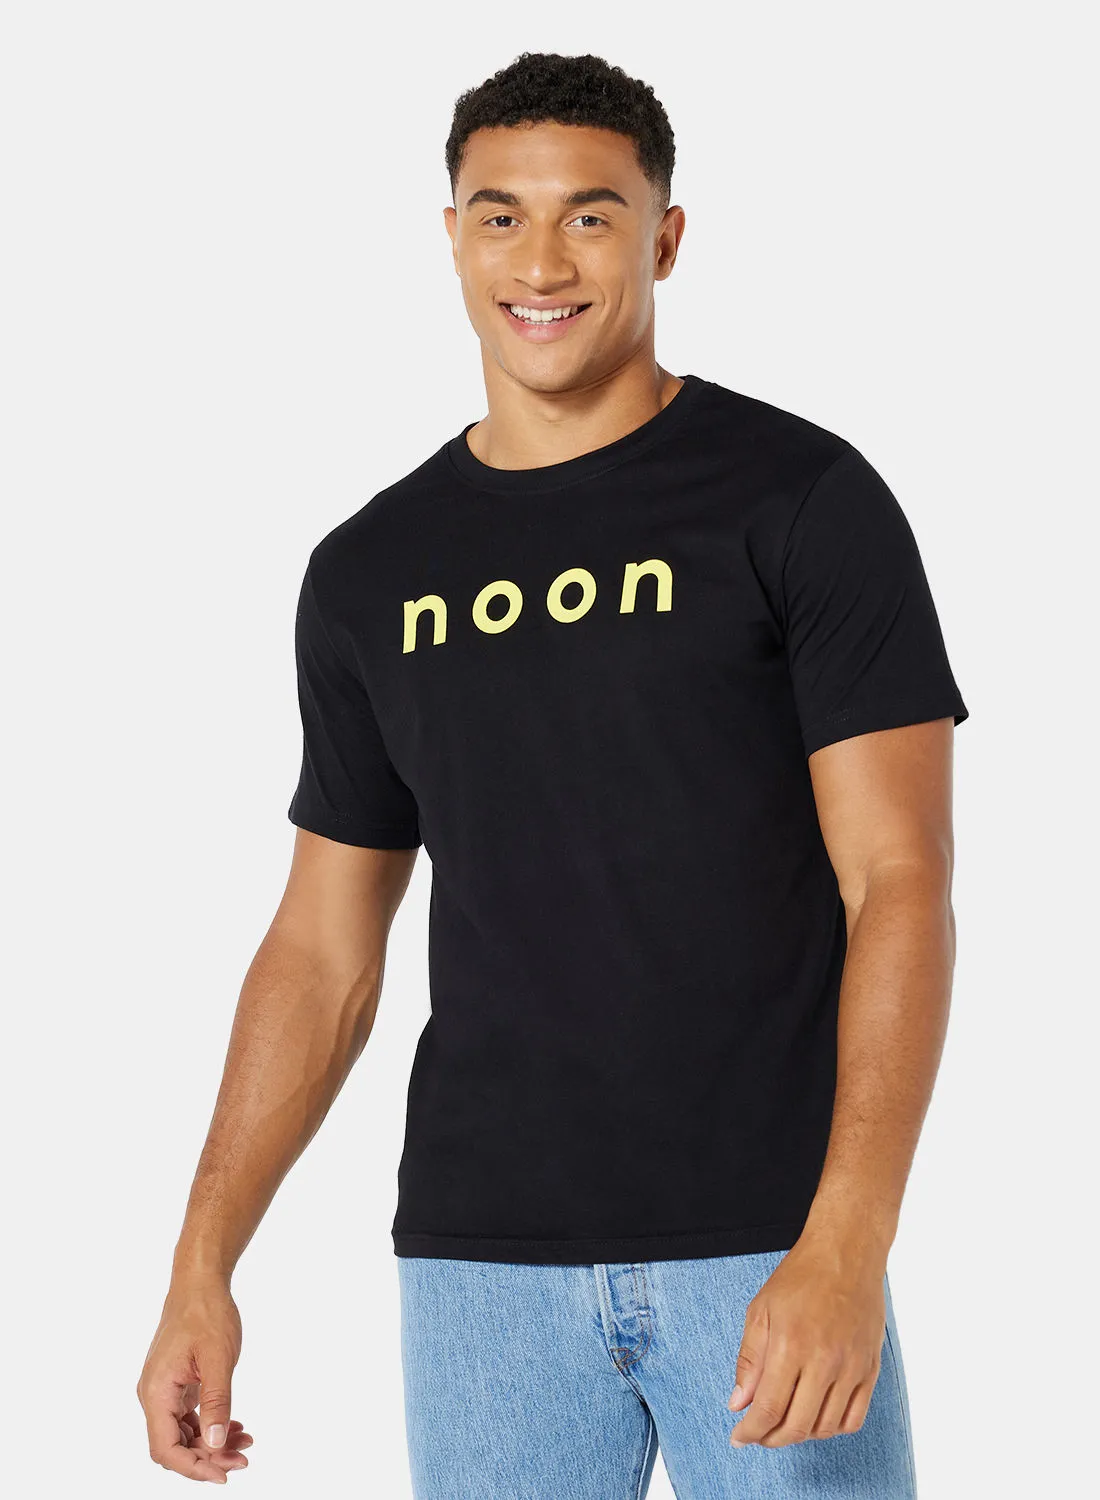 noon Merchandise T-Shirt For Men Black